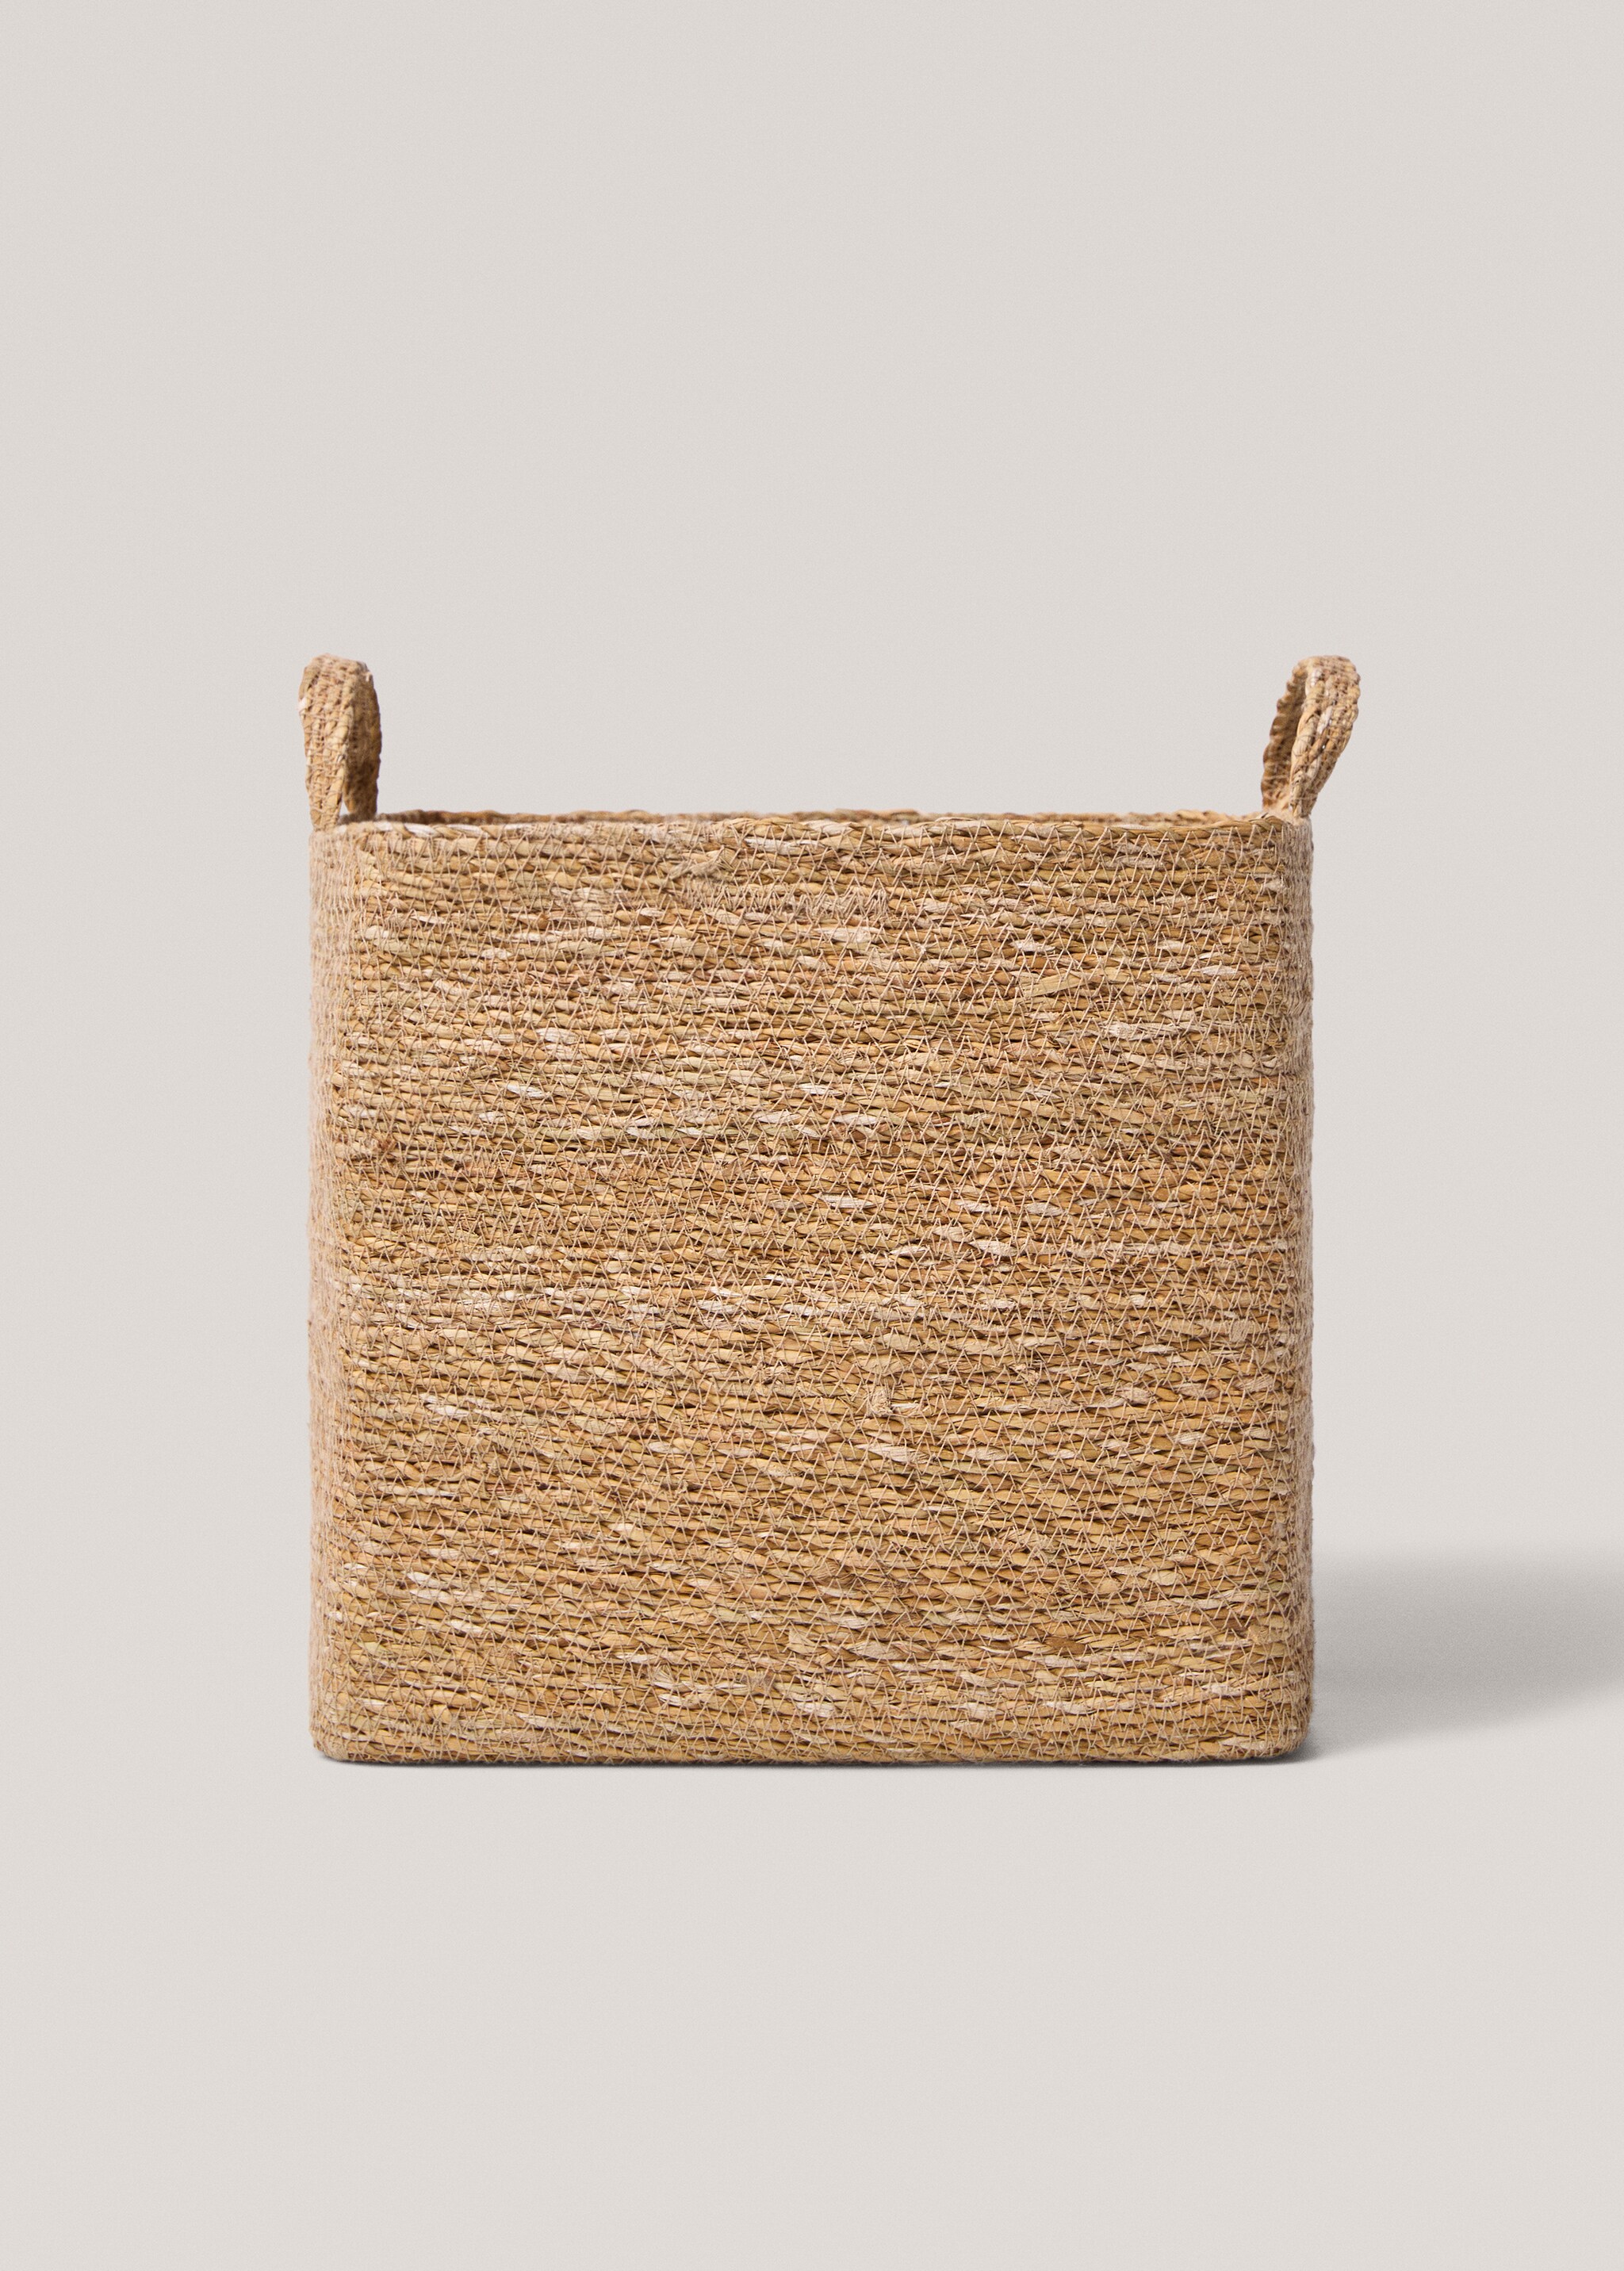 Rectangular natural fibre basket 32x30cm - Article without model